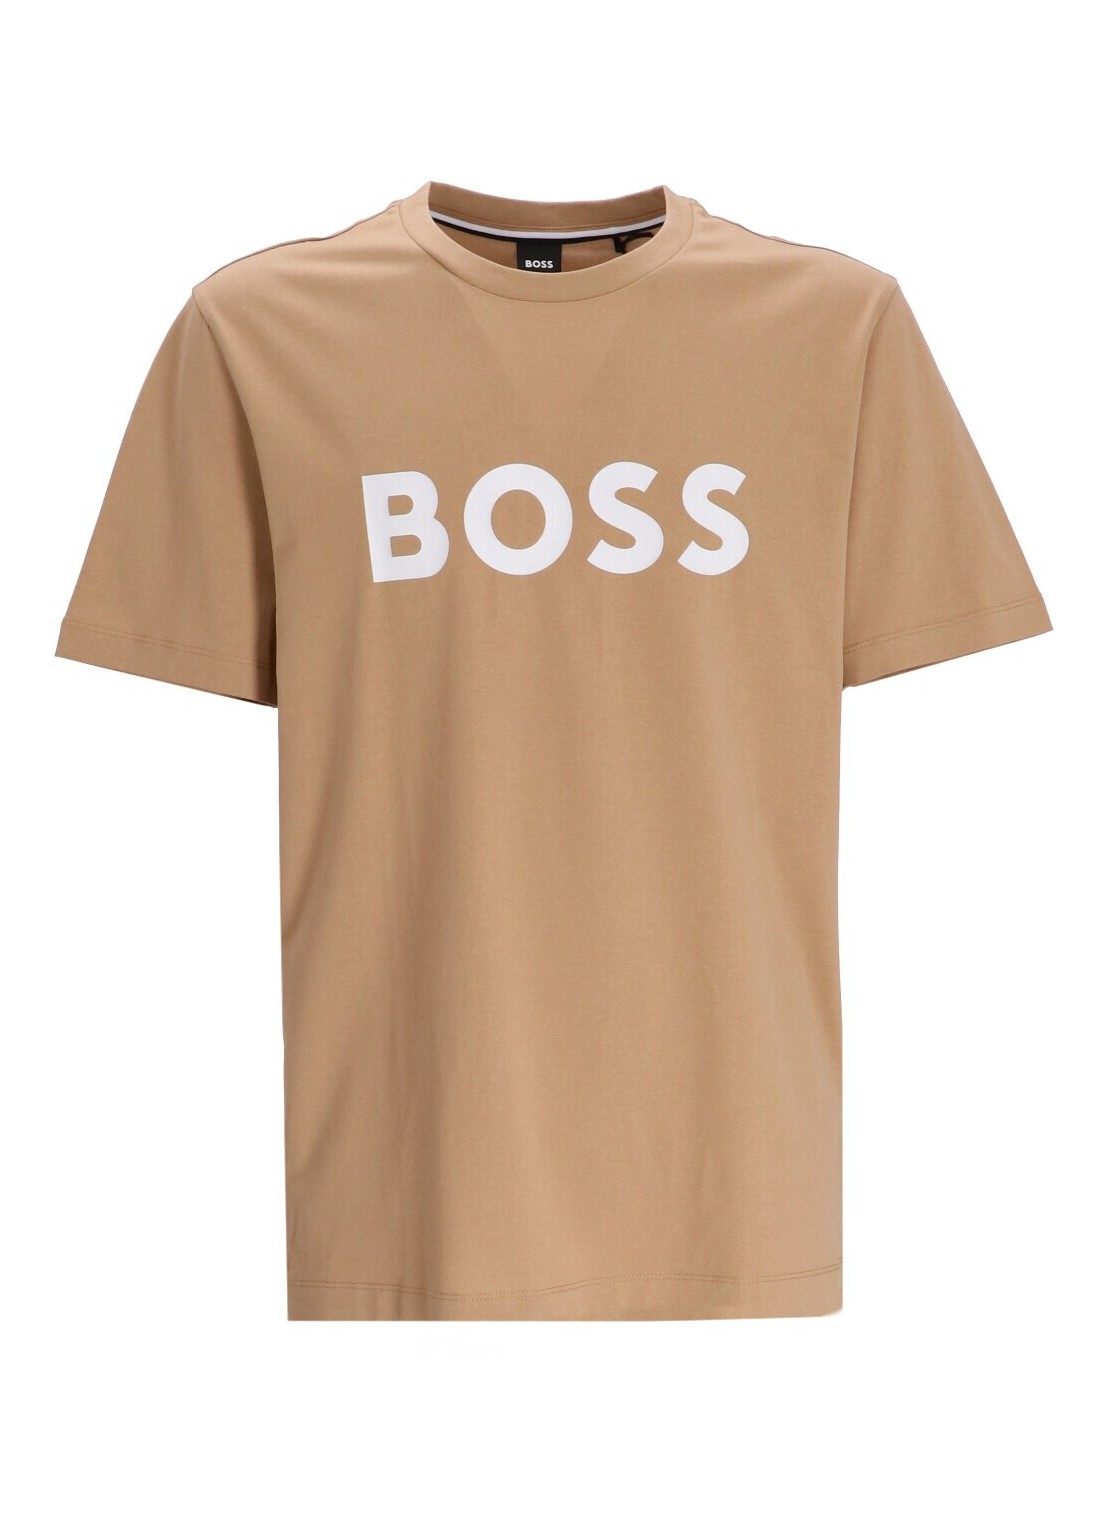 Camiseta boss t-shirt man tiburt 354 50495742 260 talla beige
 